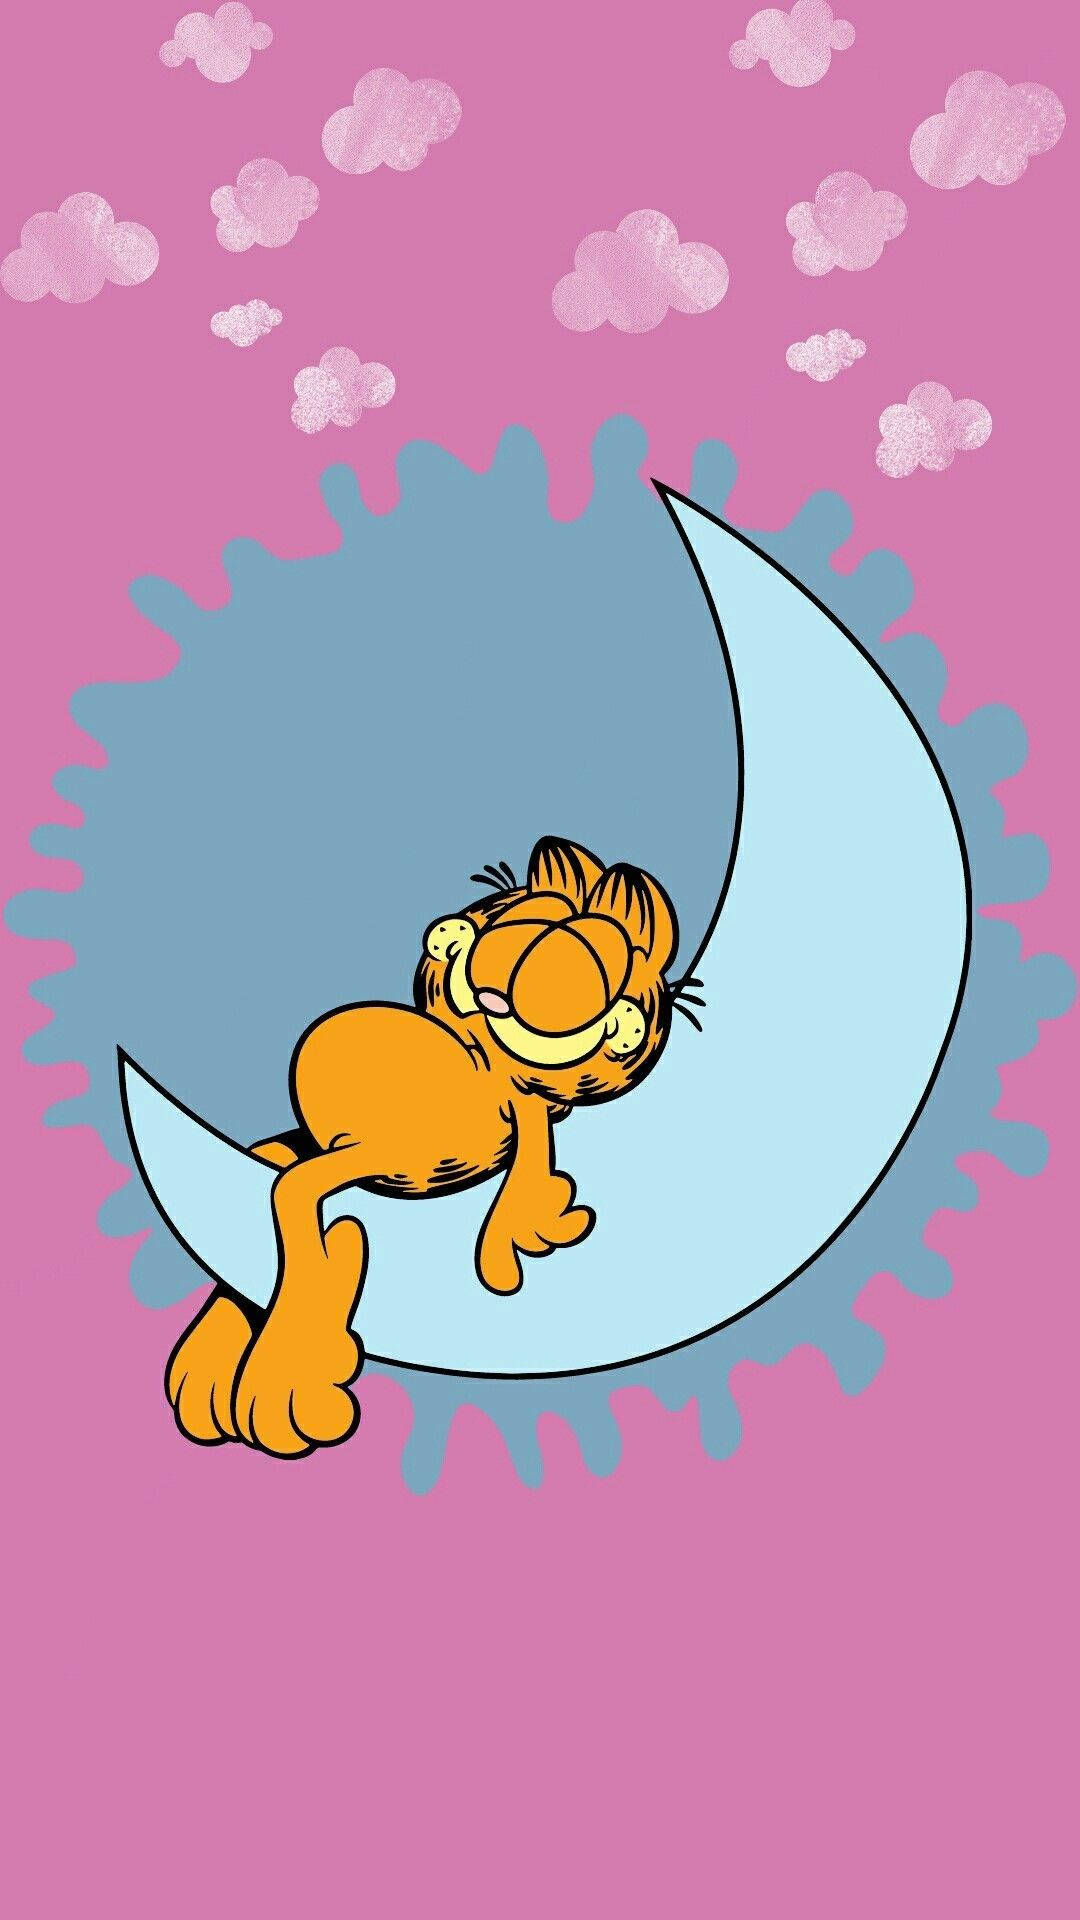 Garfield Sleeping On The Moon Background